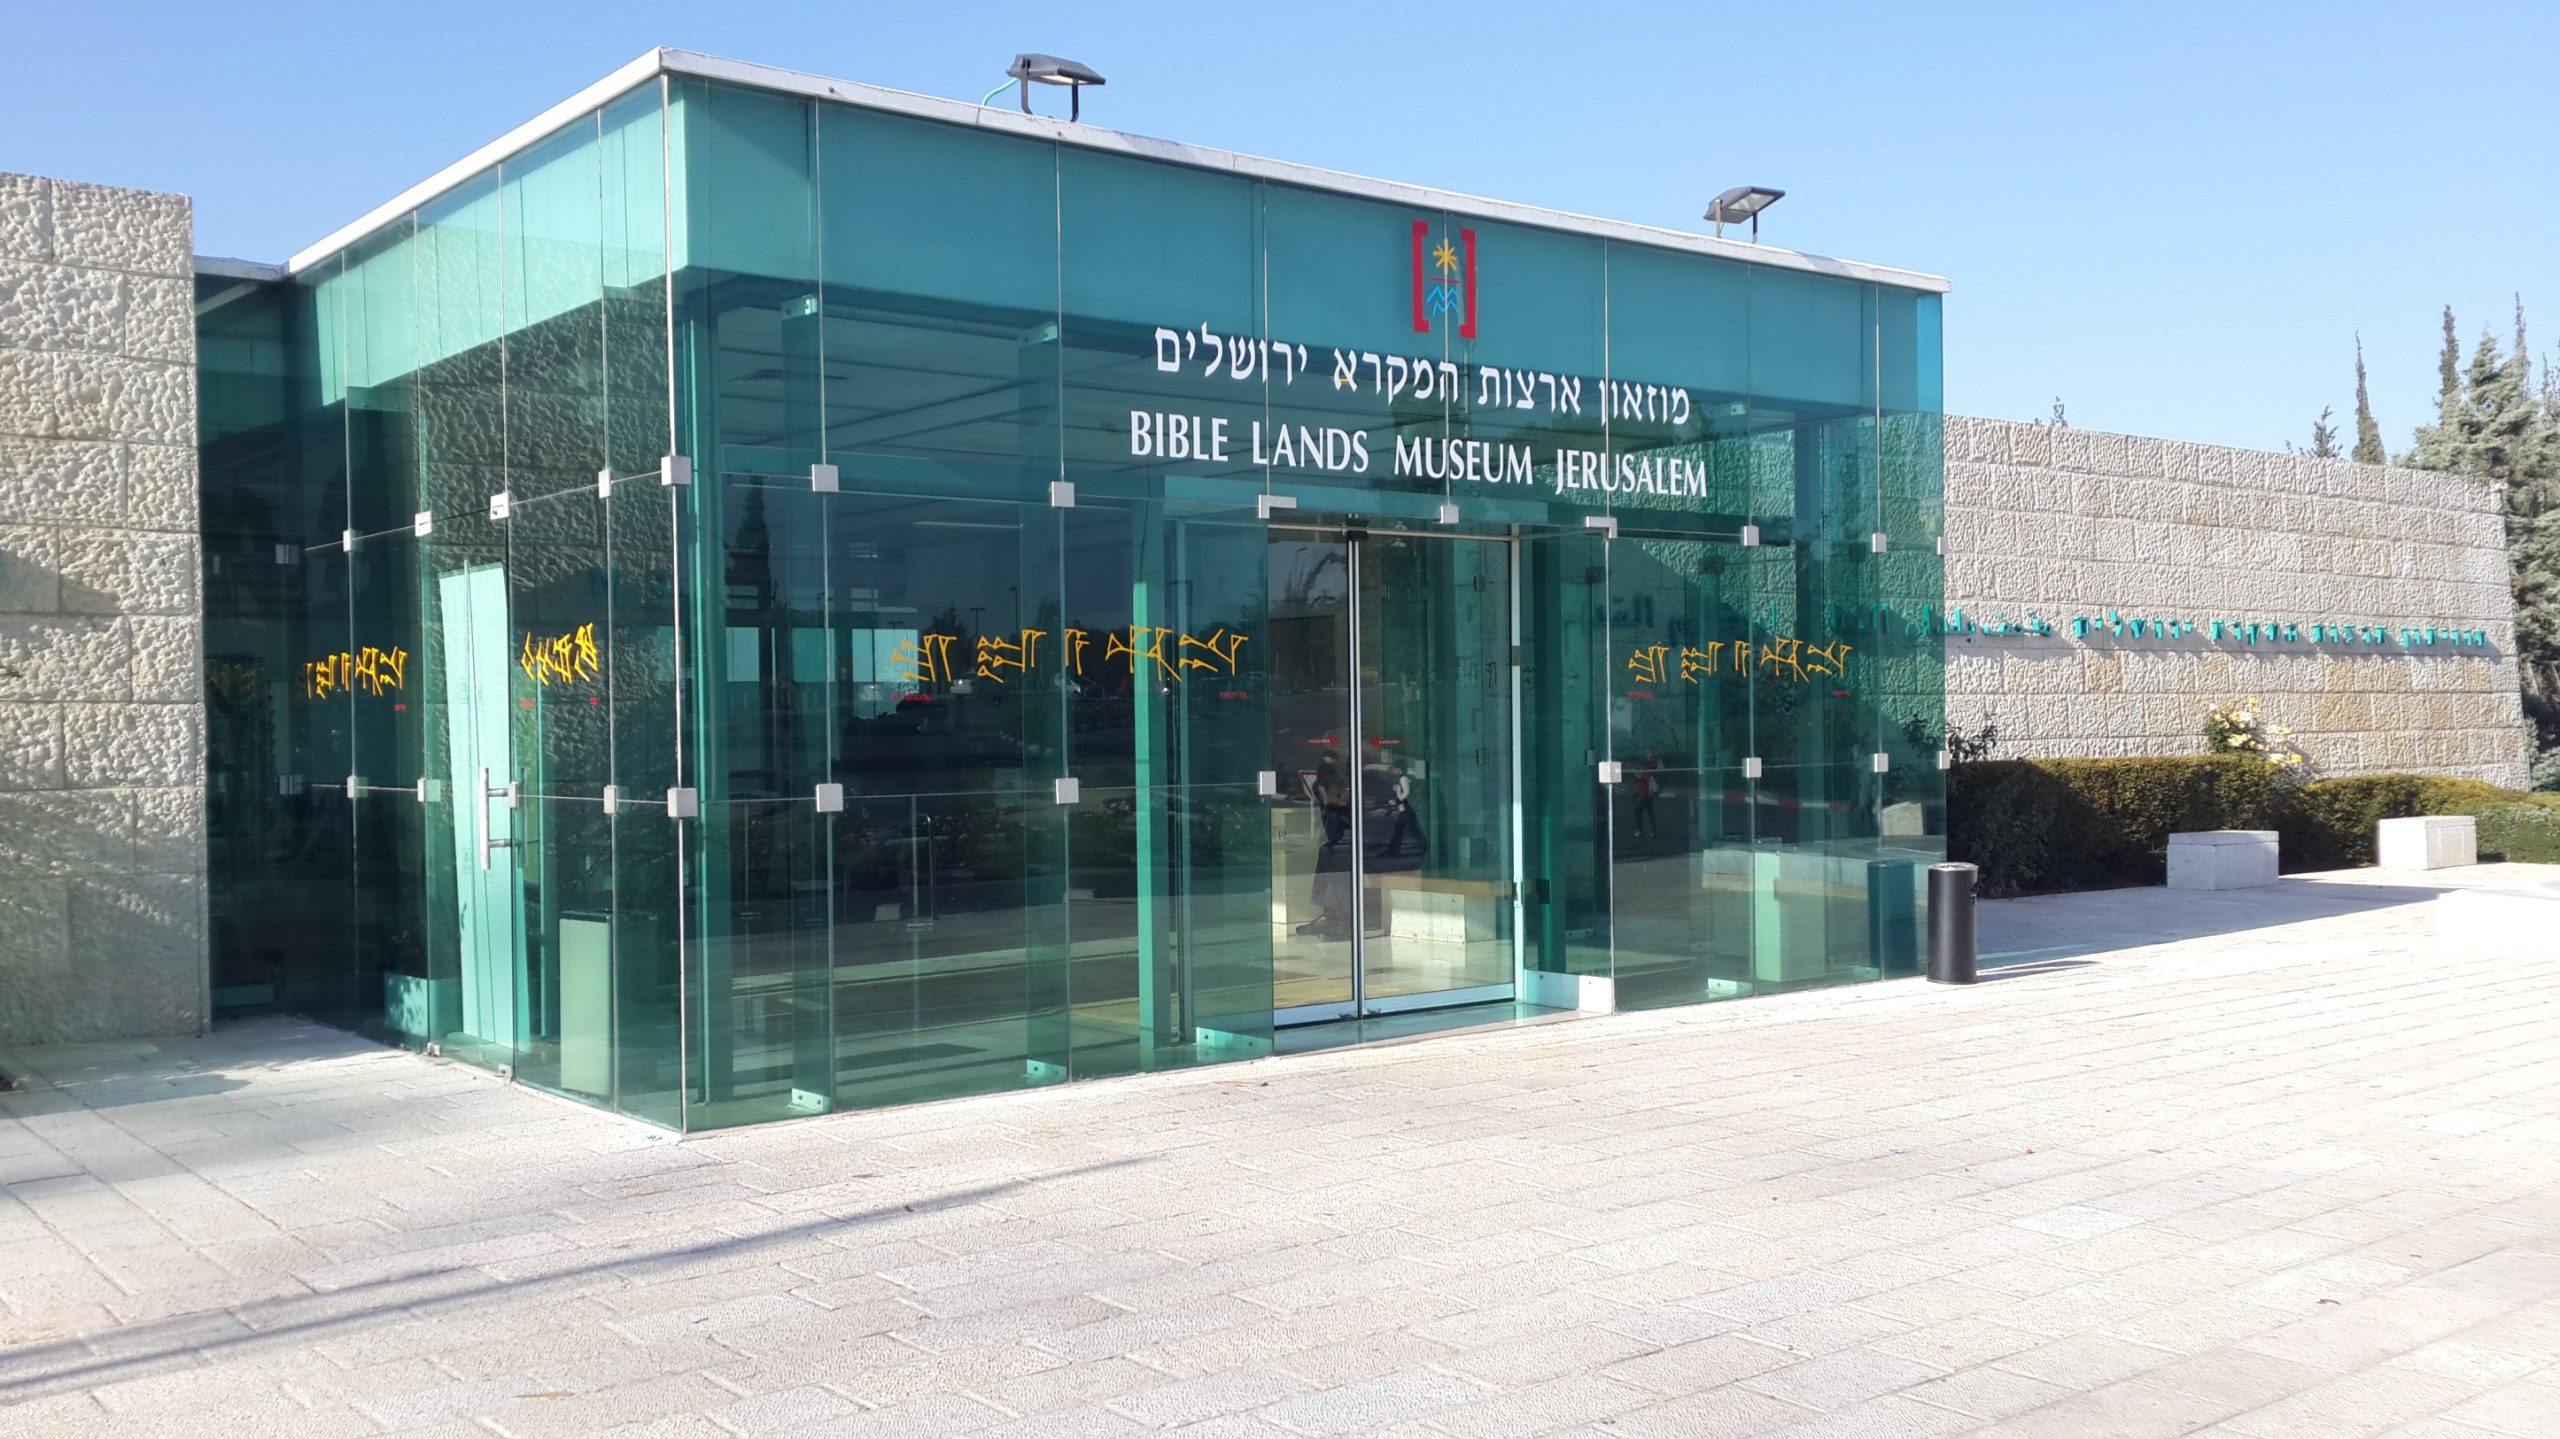 israel museum bible tour